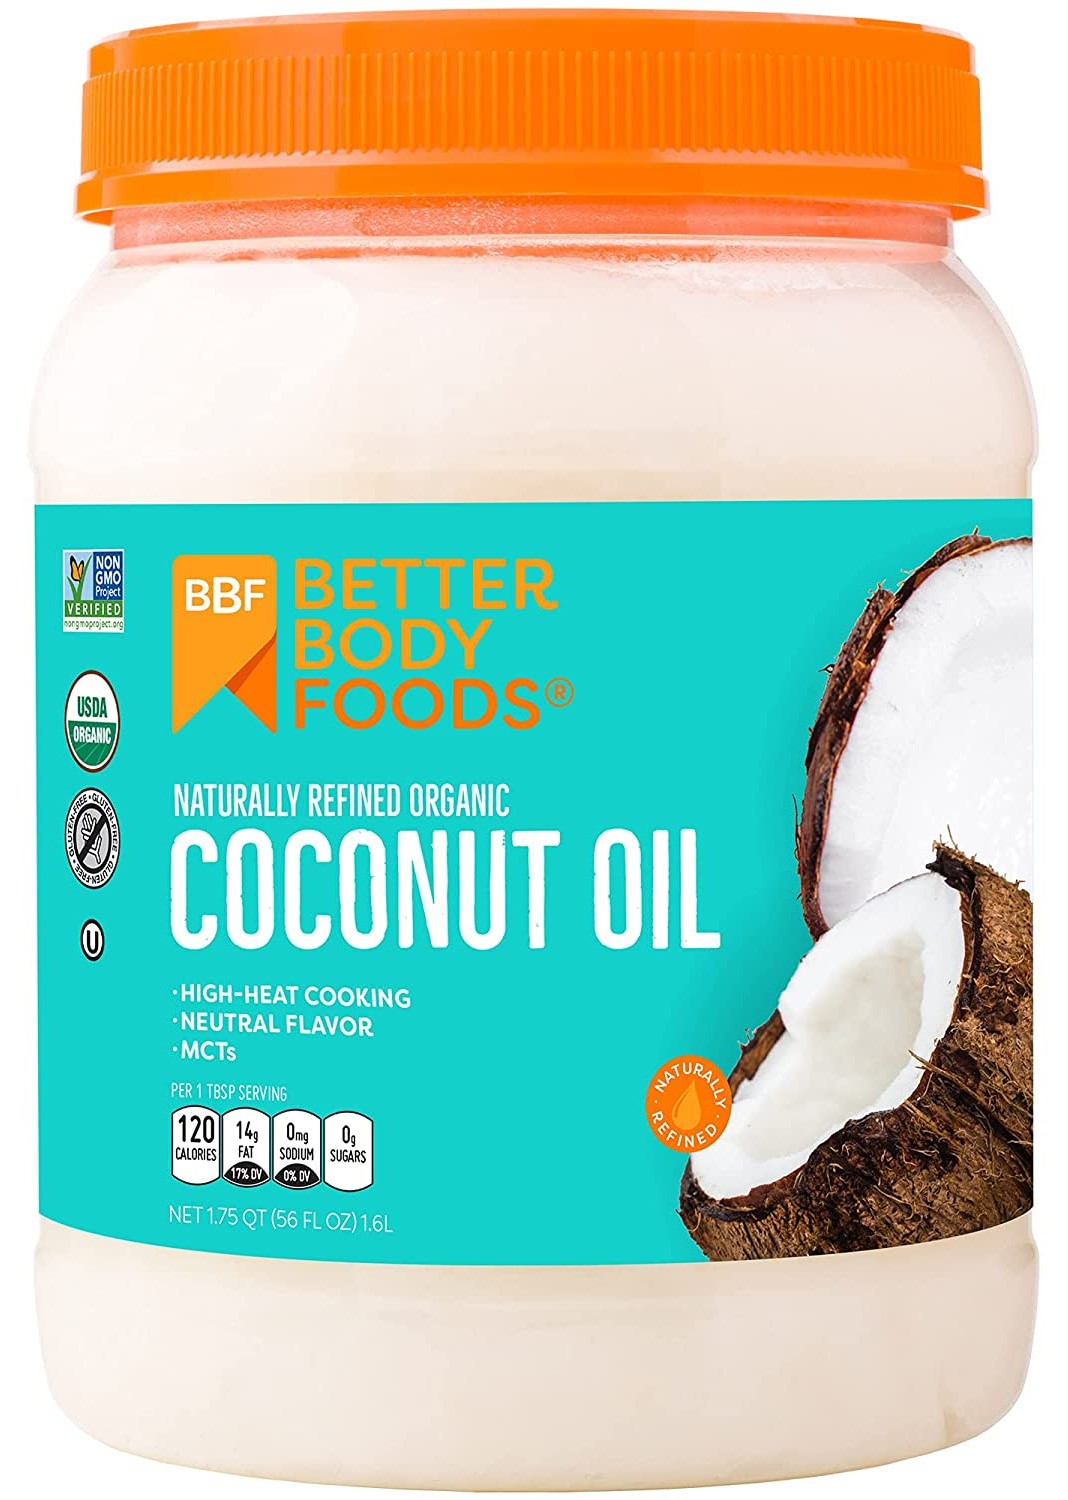 Organic Naturally Refined Coconut Oil, $11.96